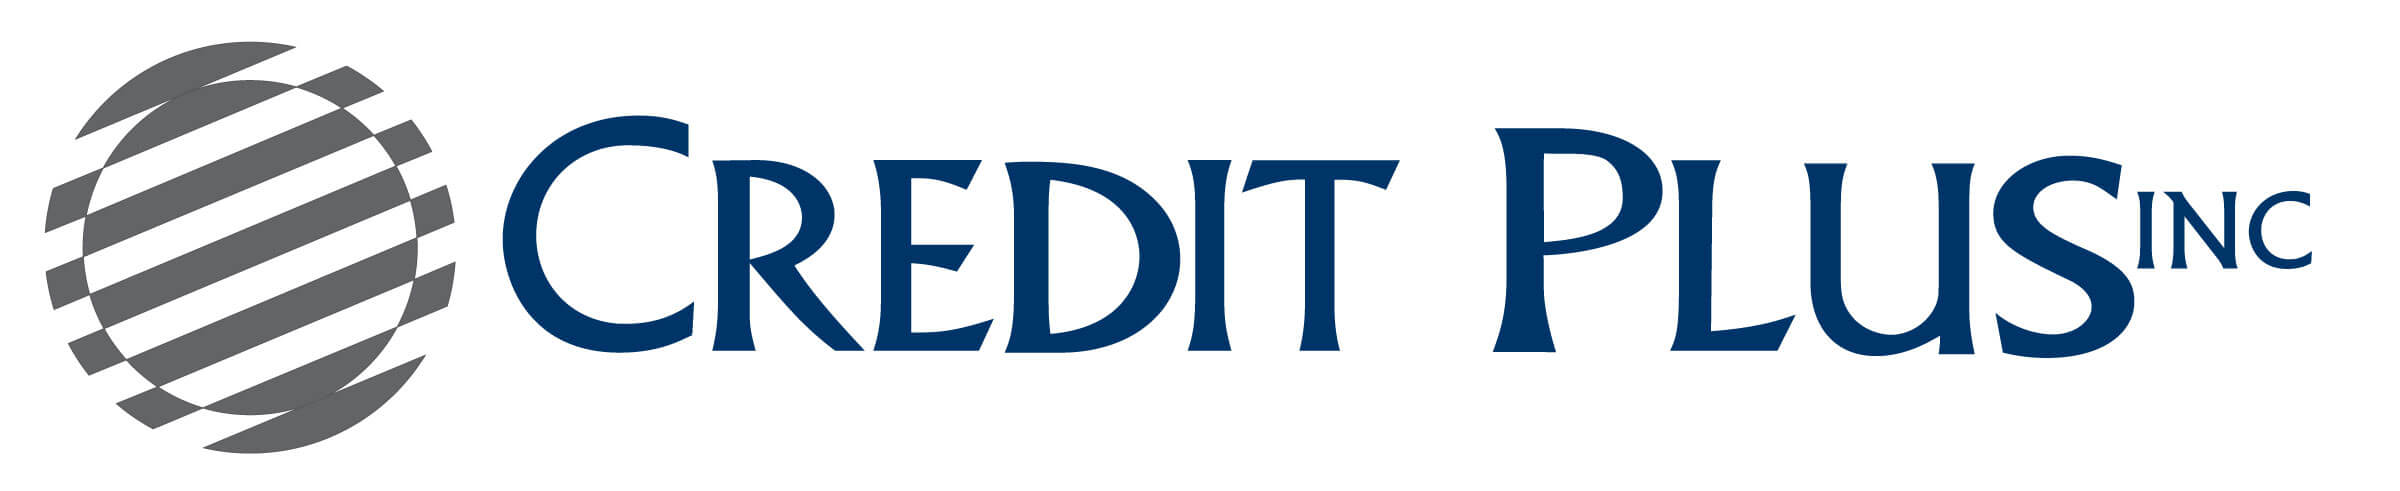 credit-plus-logo